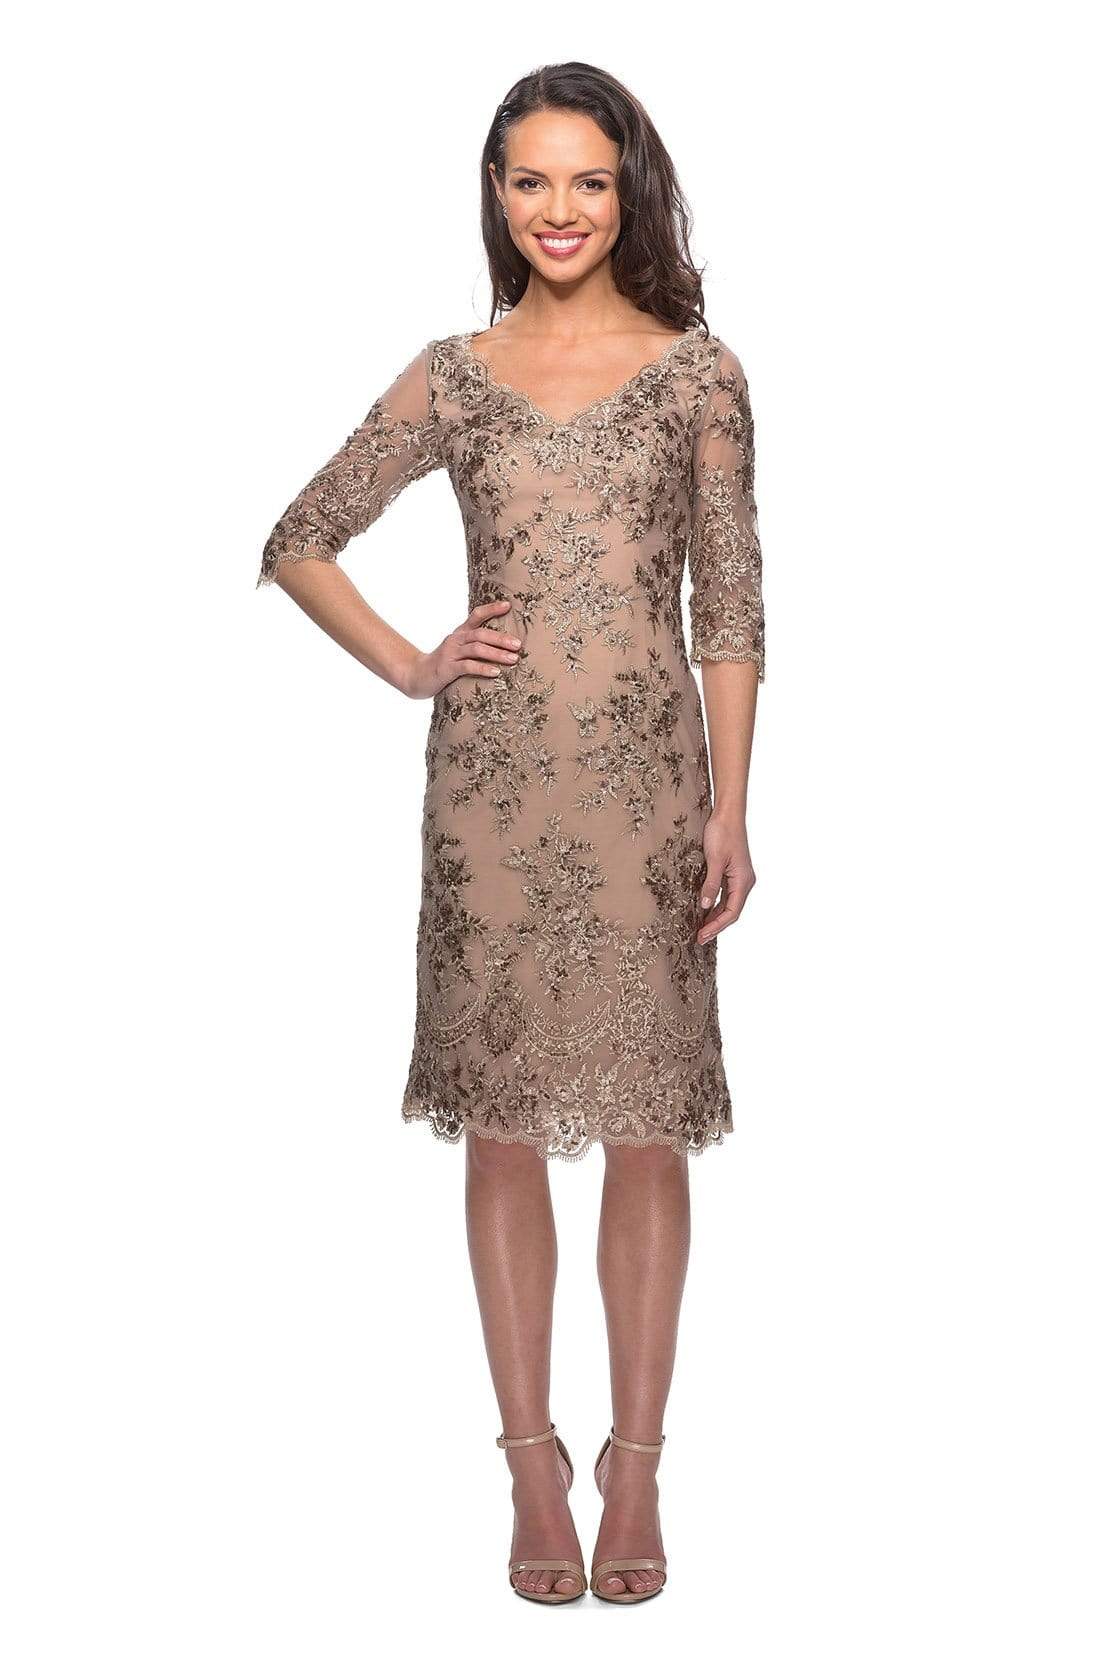 La Femme - 26871 Knee Length Quarter Sleeve Sequined Dress Special Occasion Dress